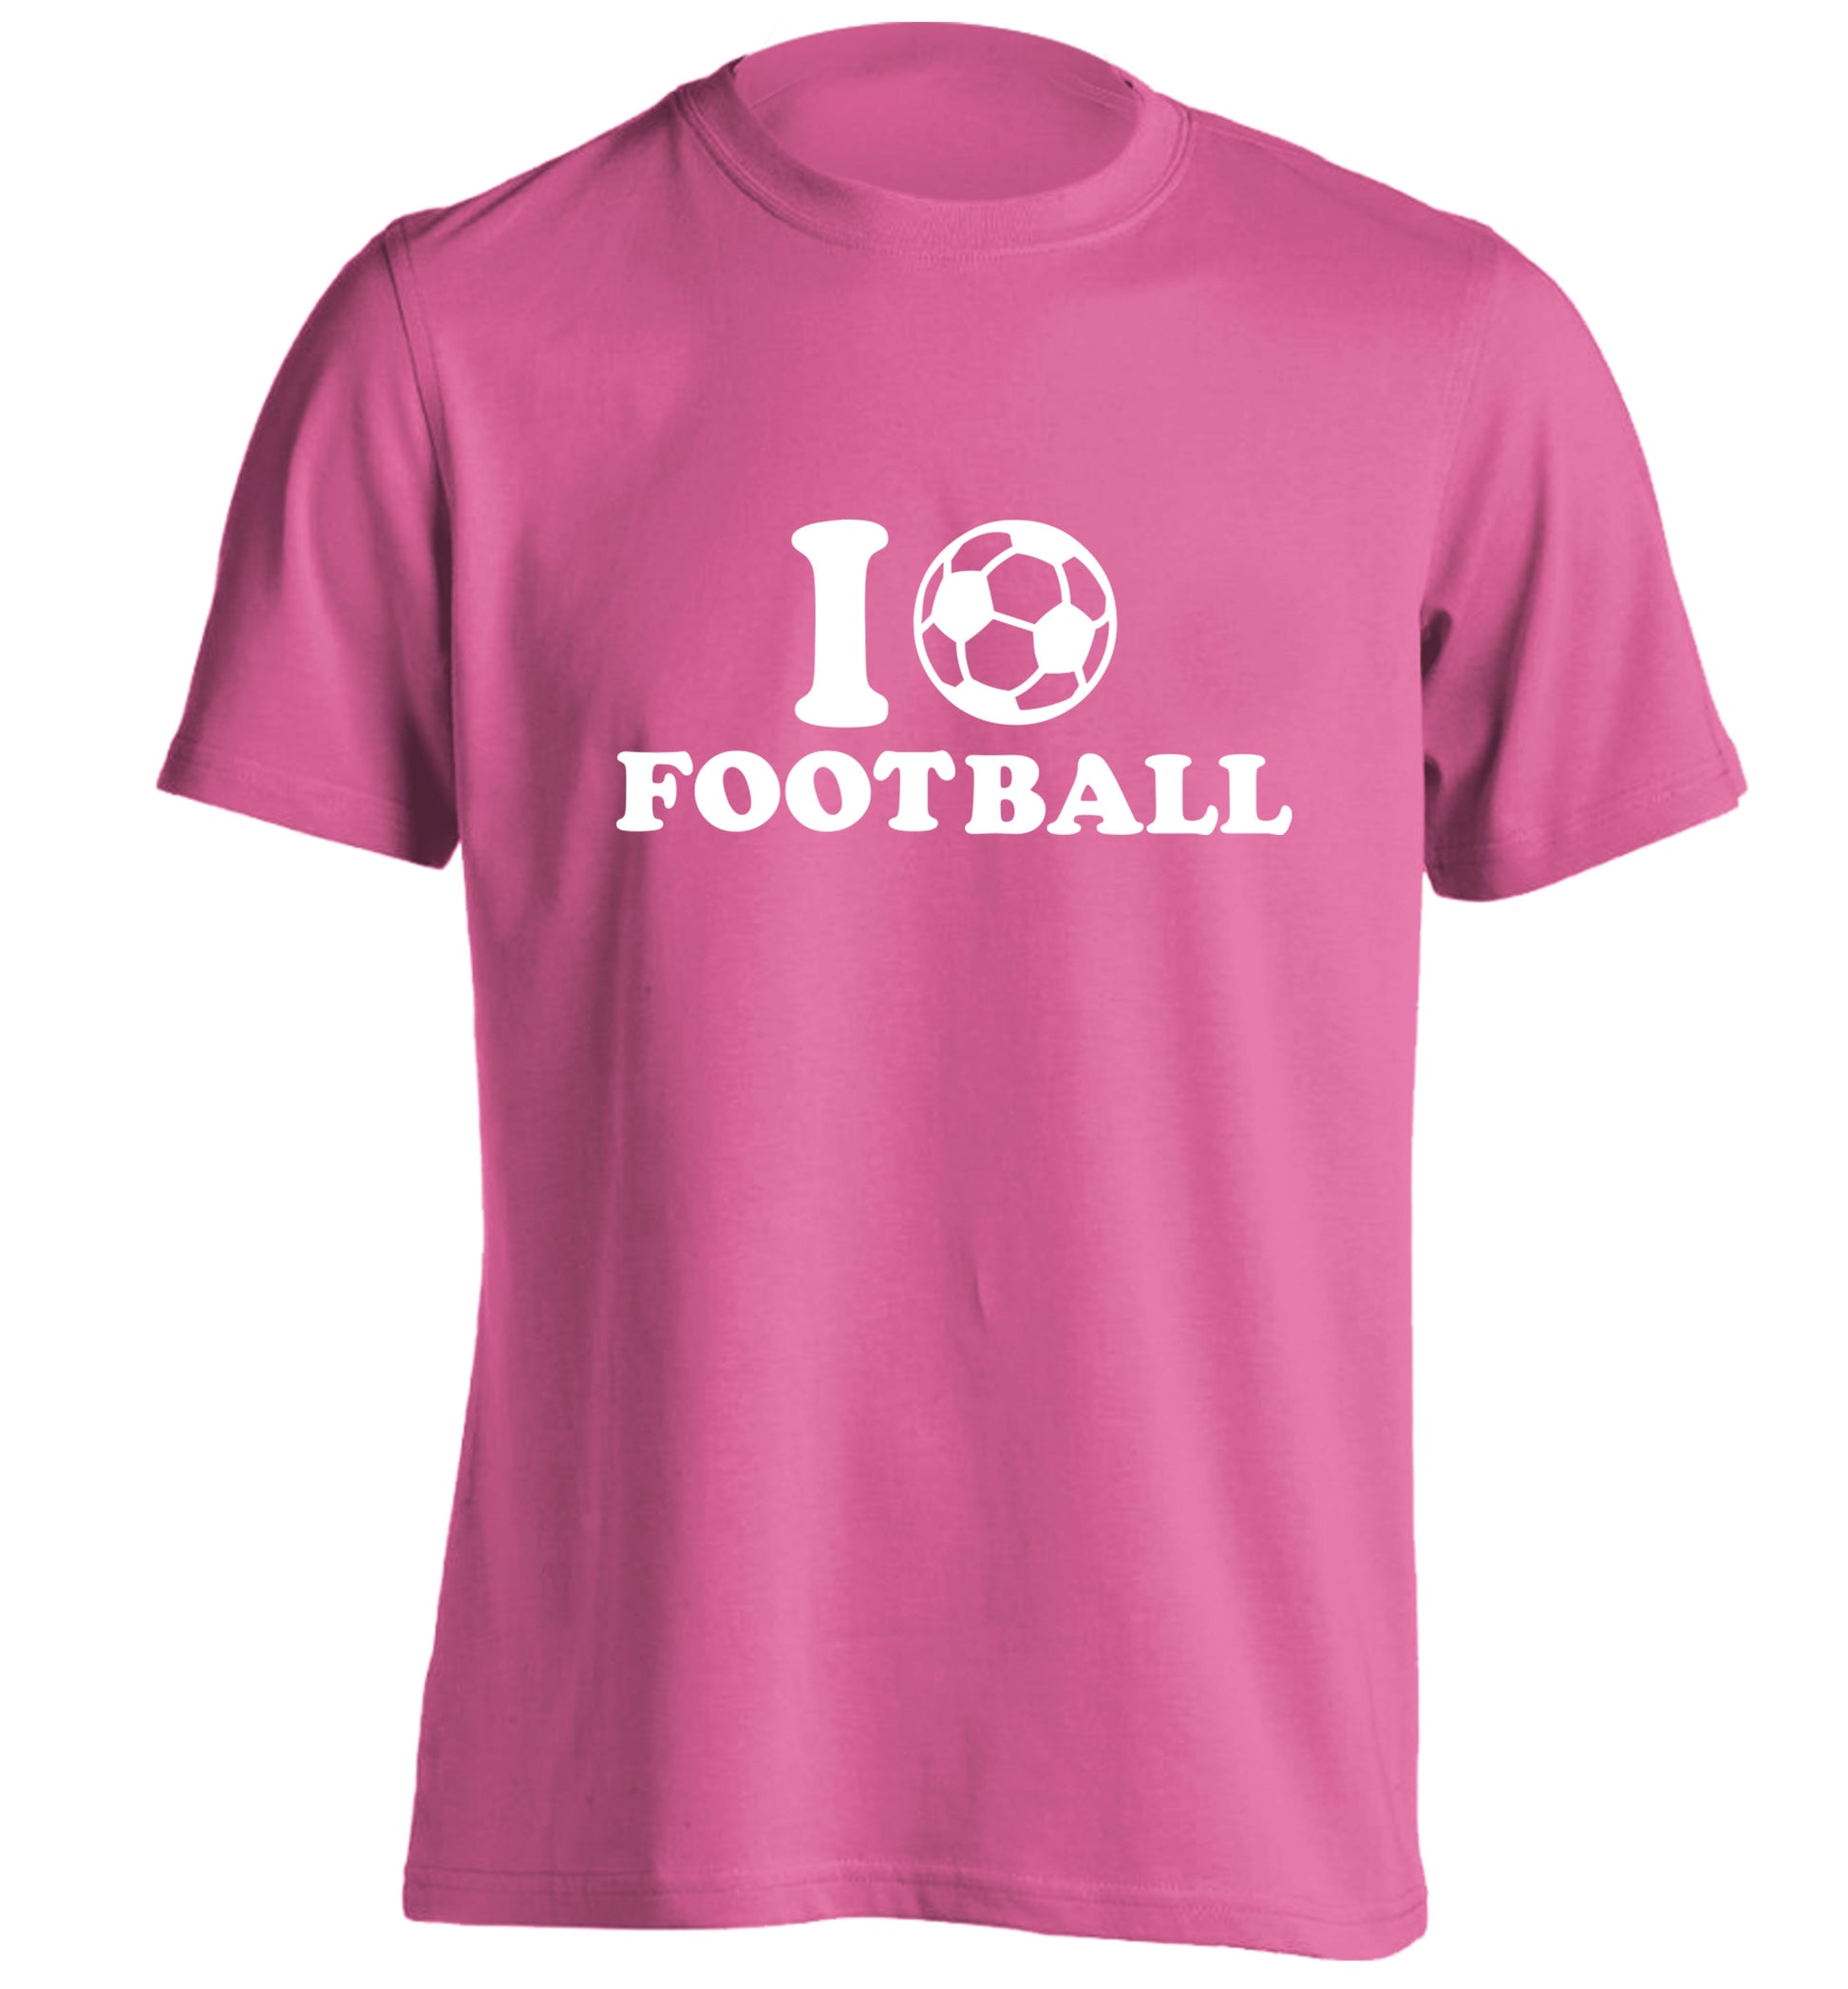 I love football adults unisexpink Tshirt 2XL